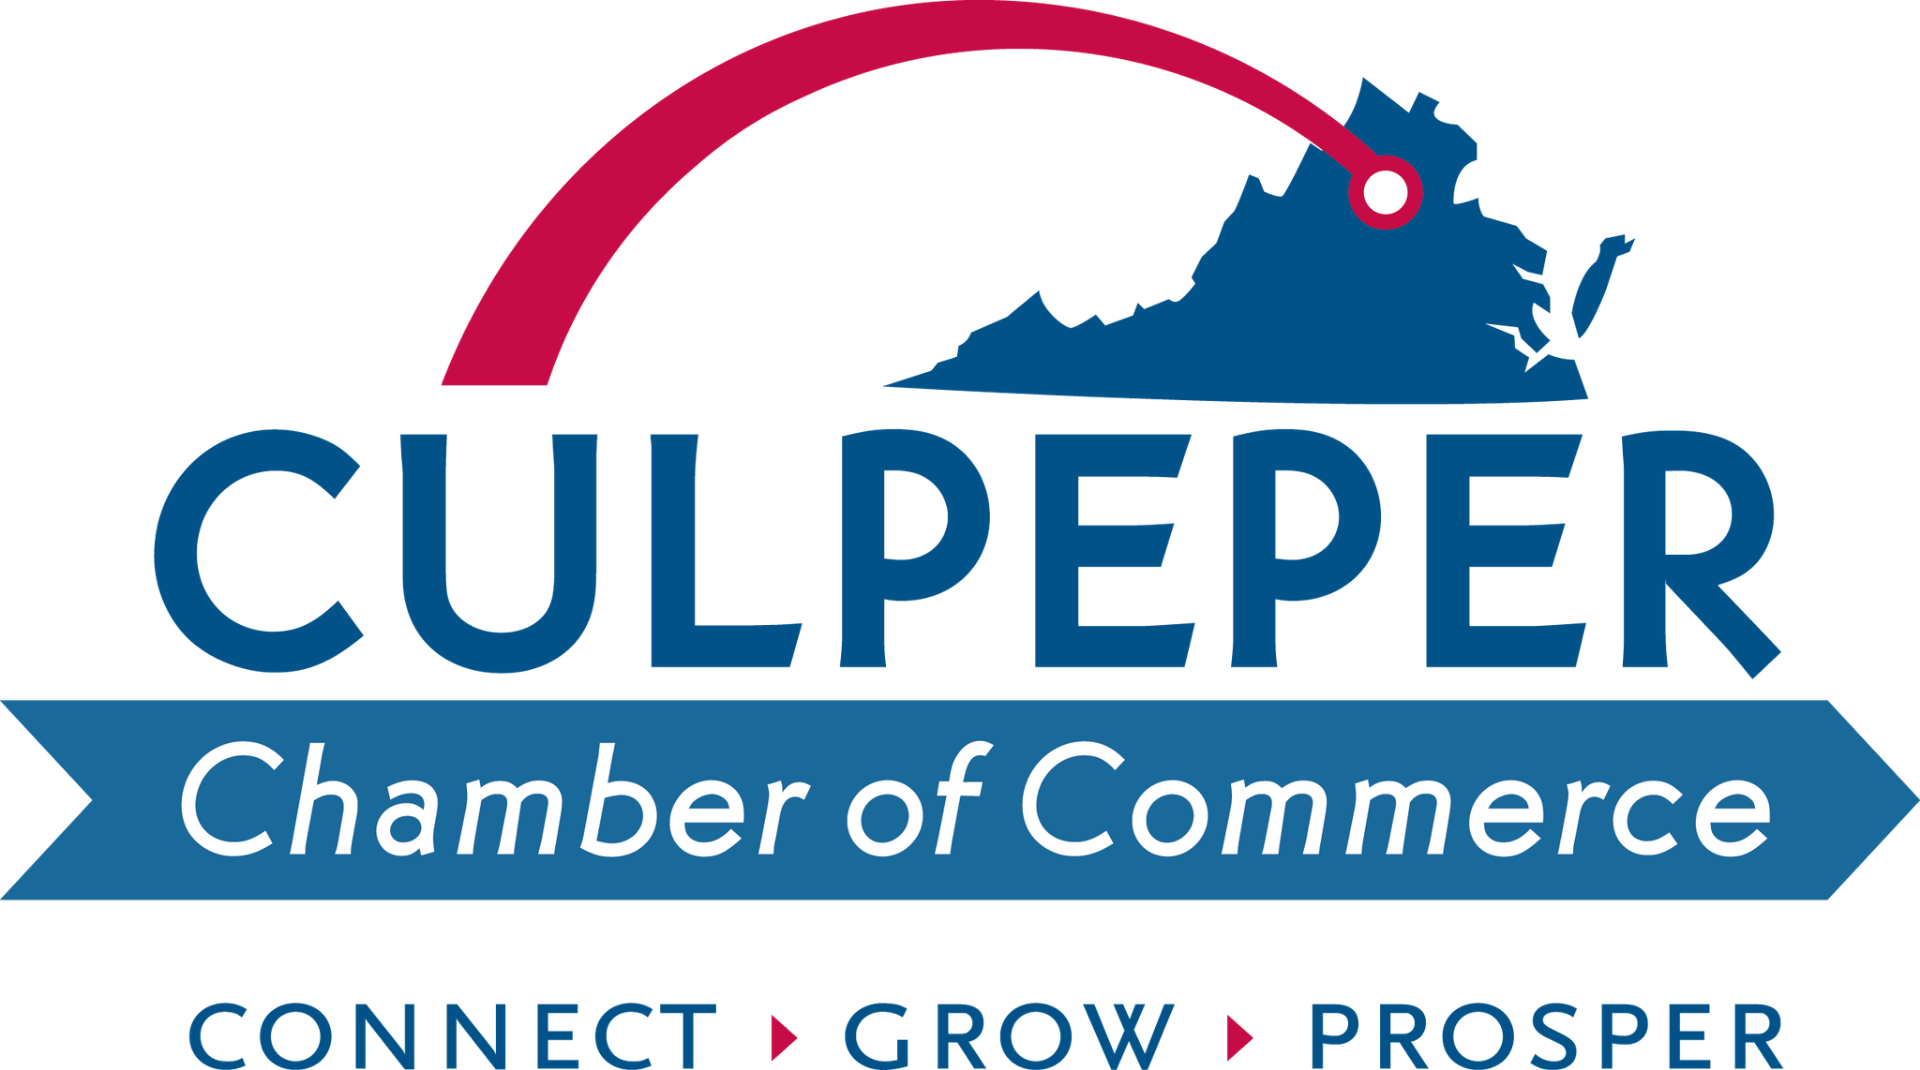 Culpeper Chamber of Commerce Online Store by Vubiz